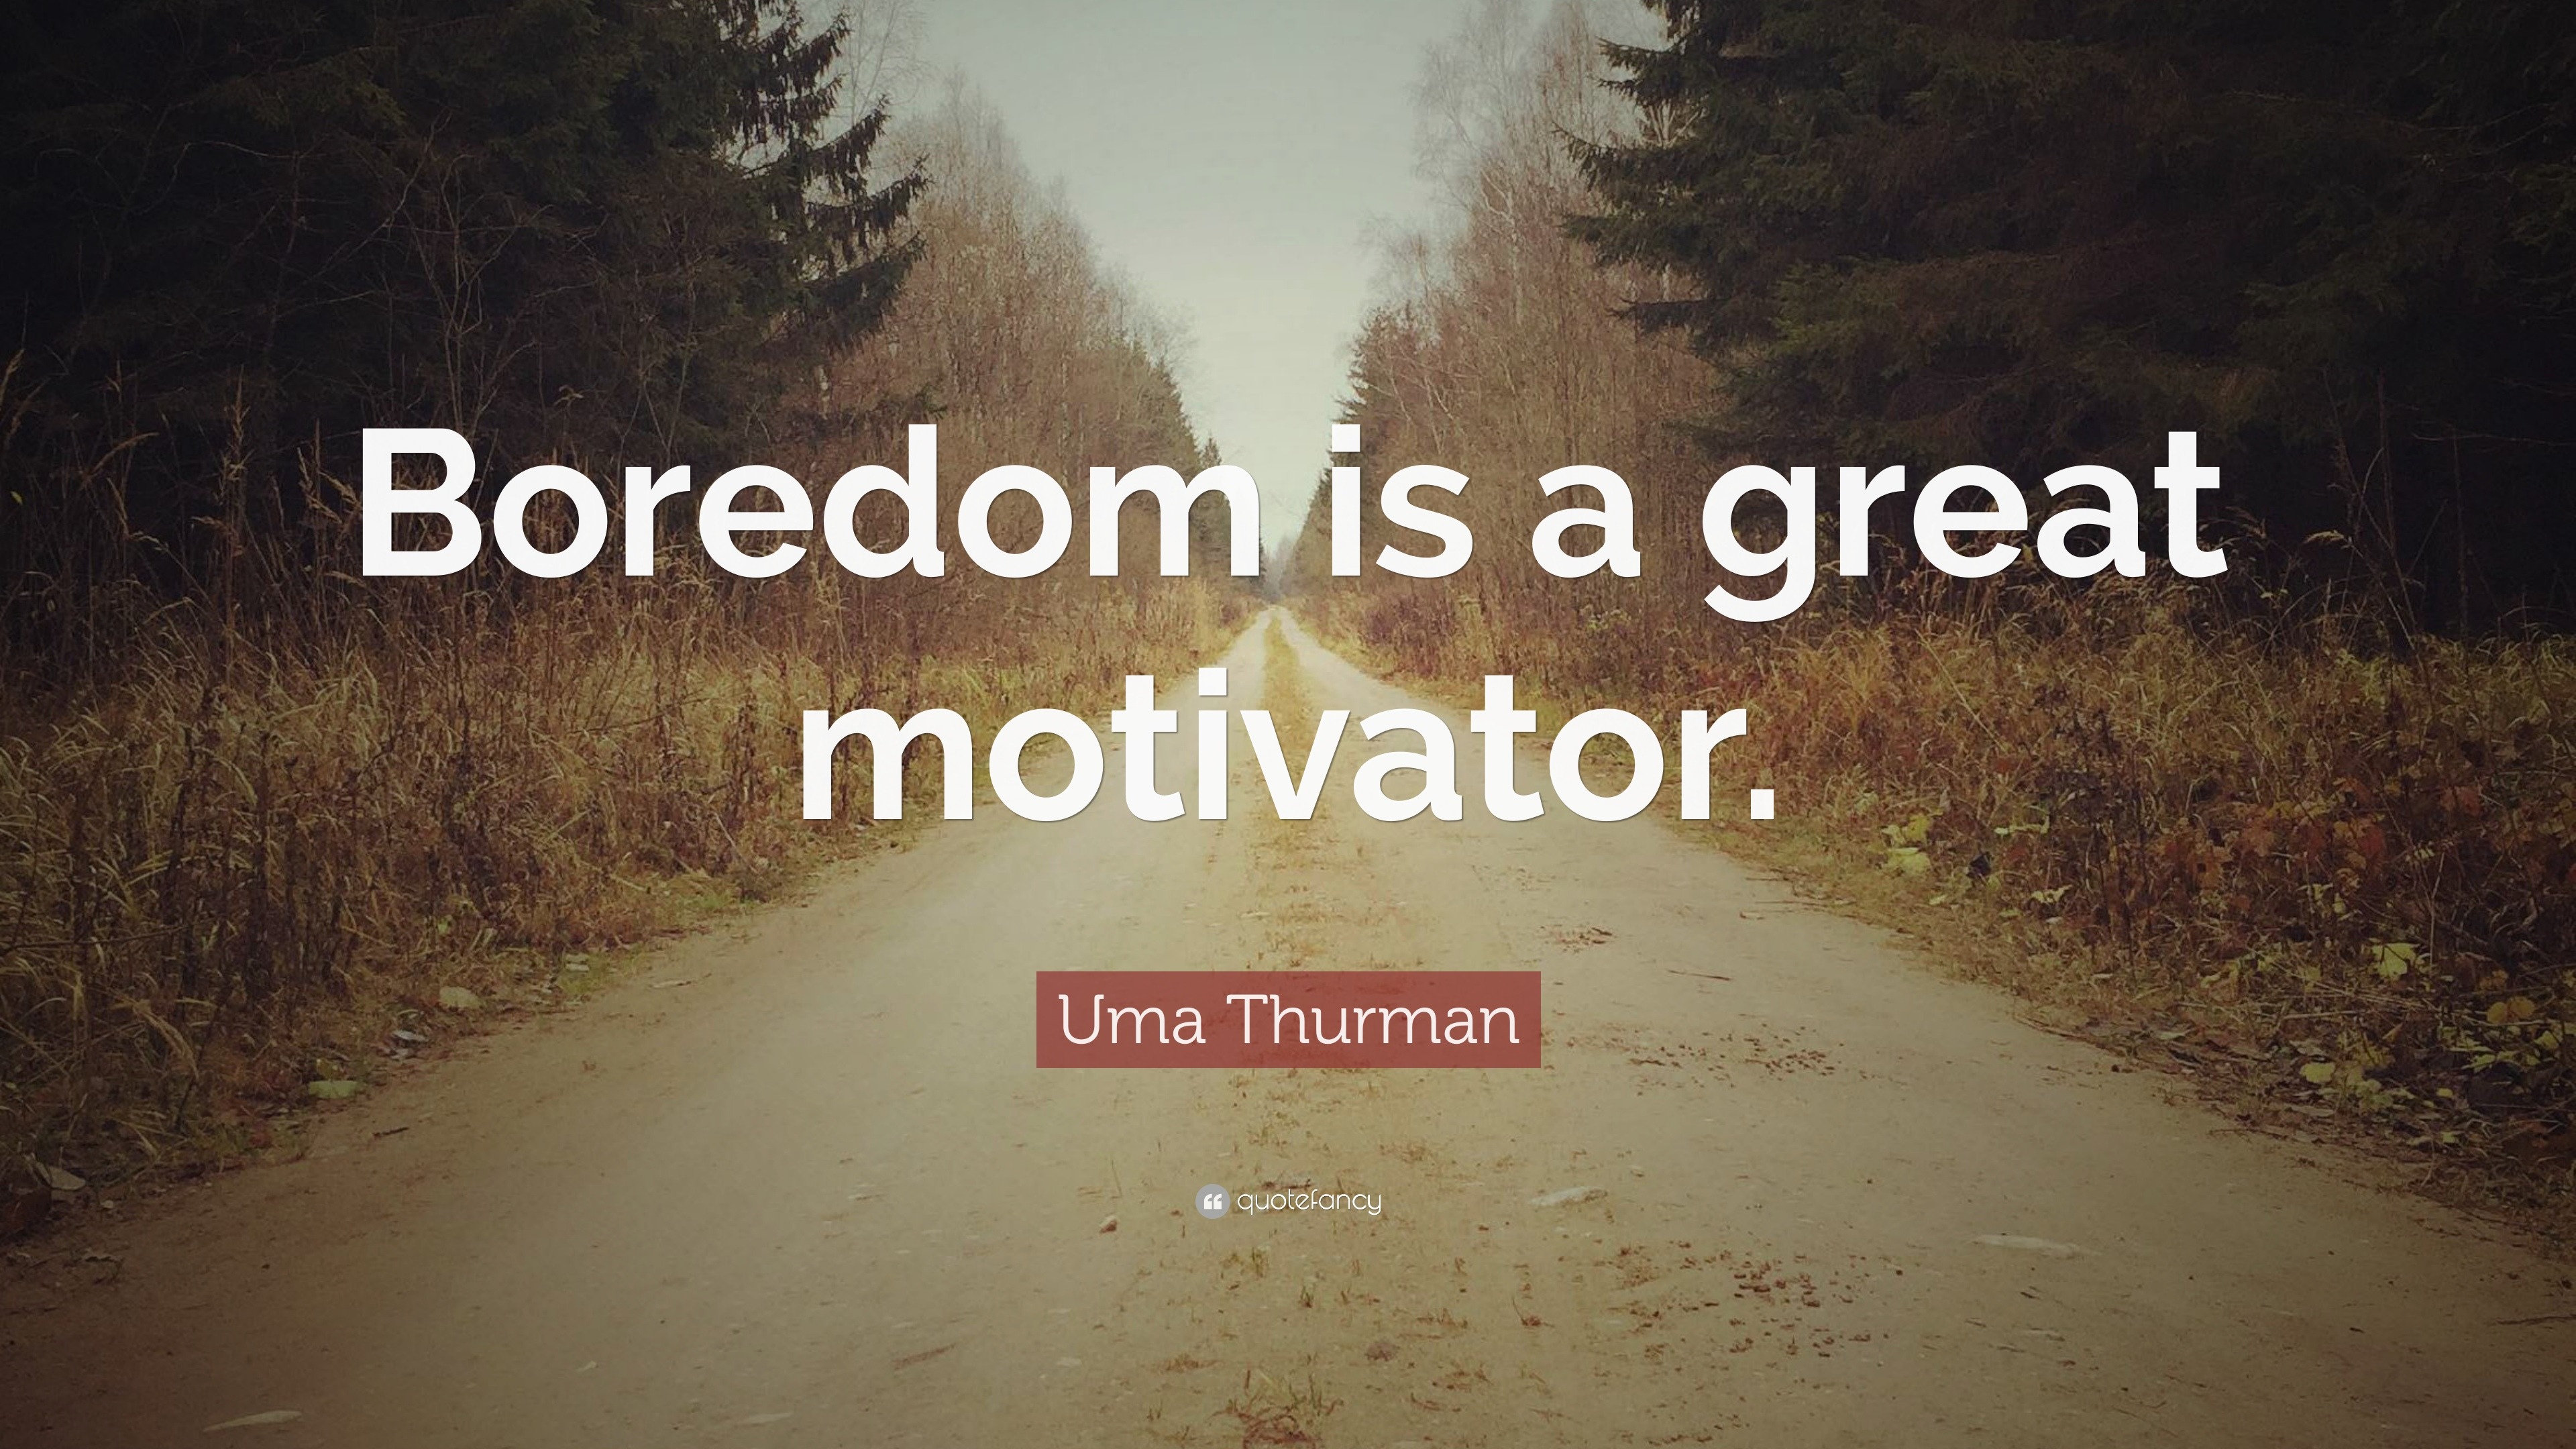 Uma Thurman Quote: “Boredom is a great motivator.”